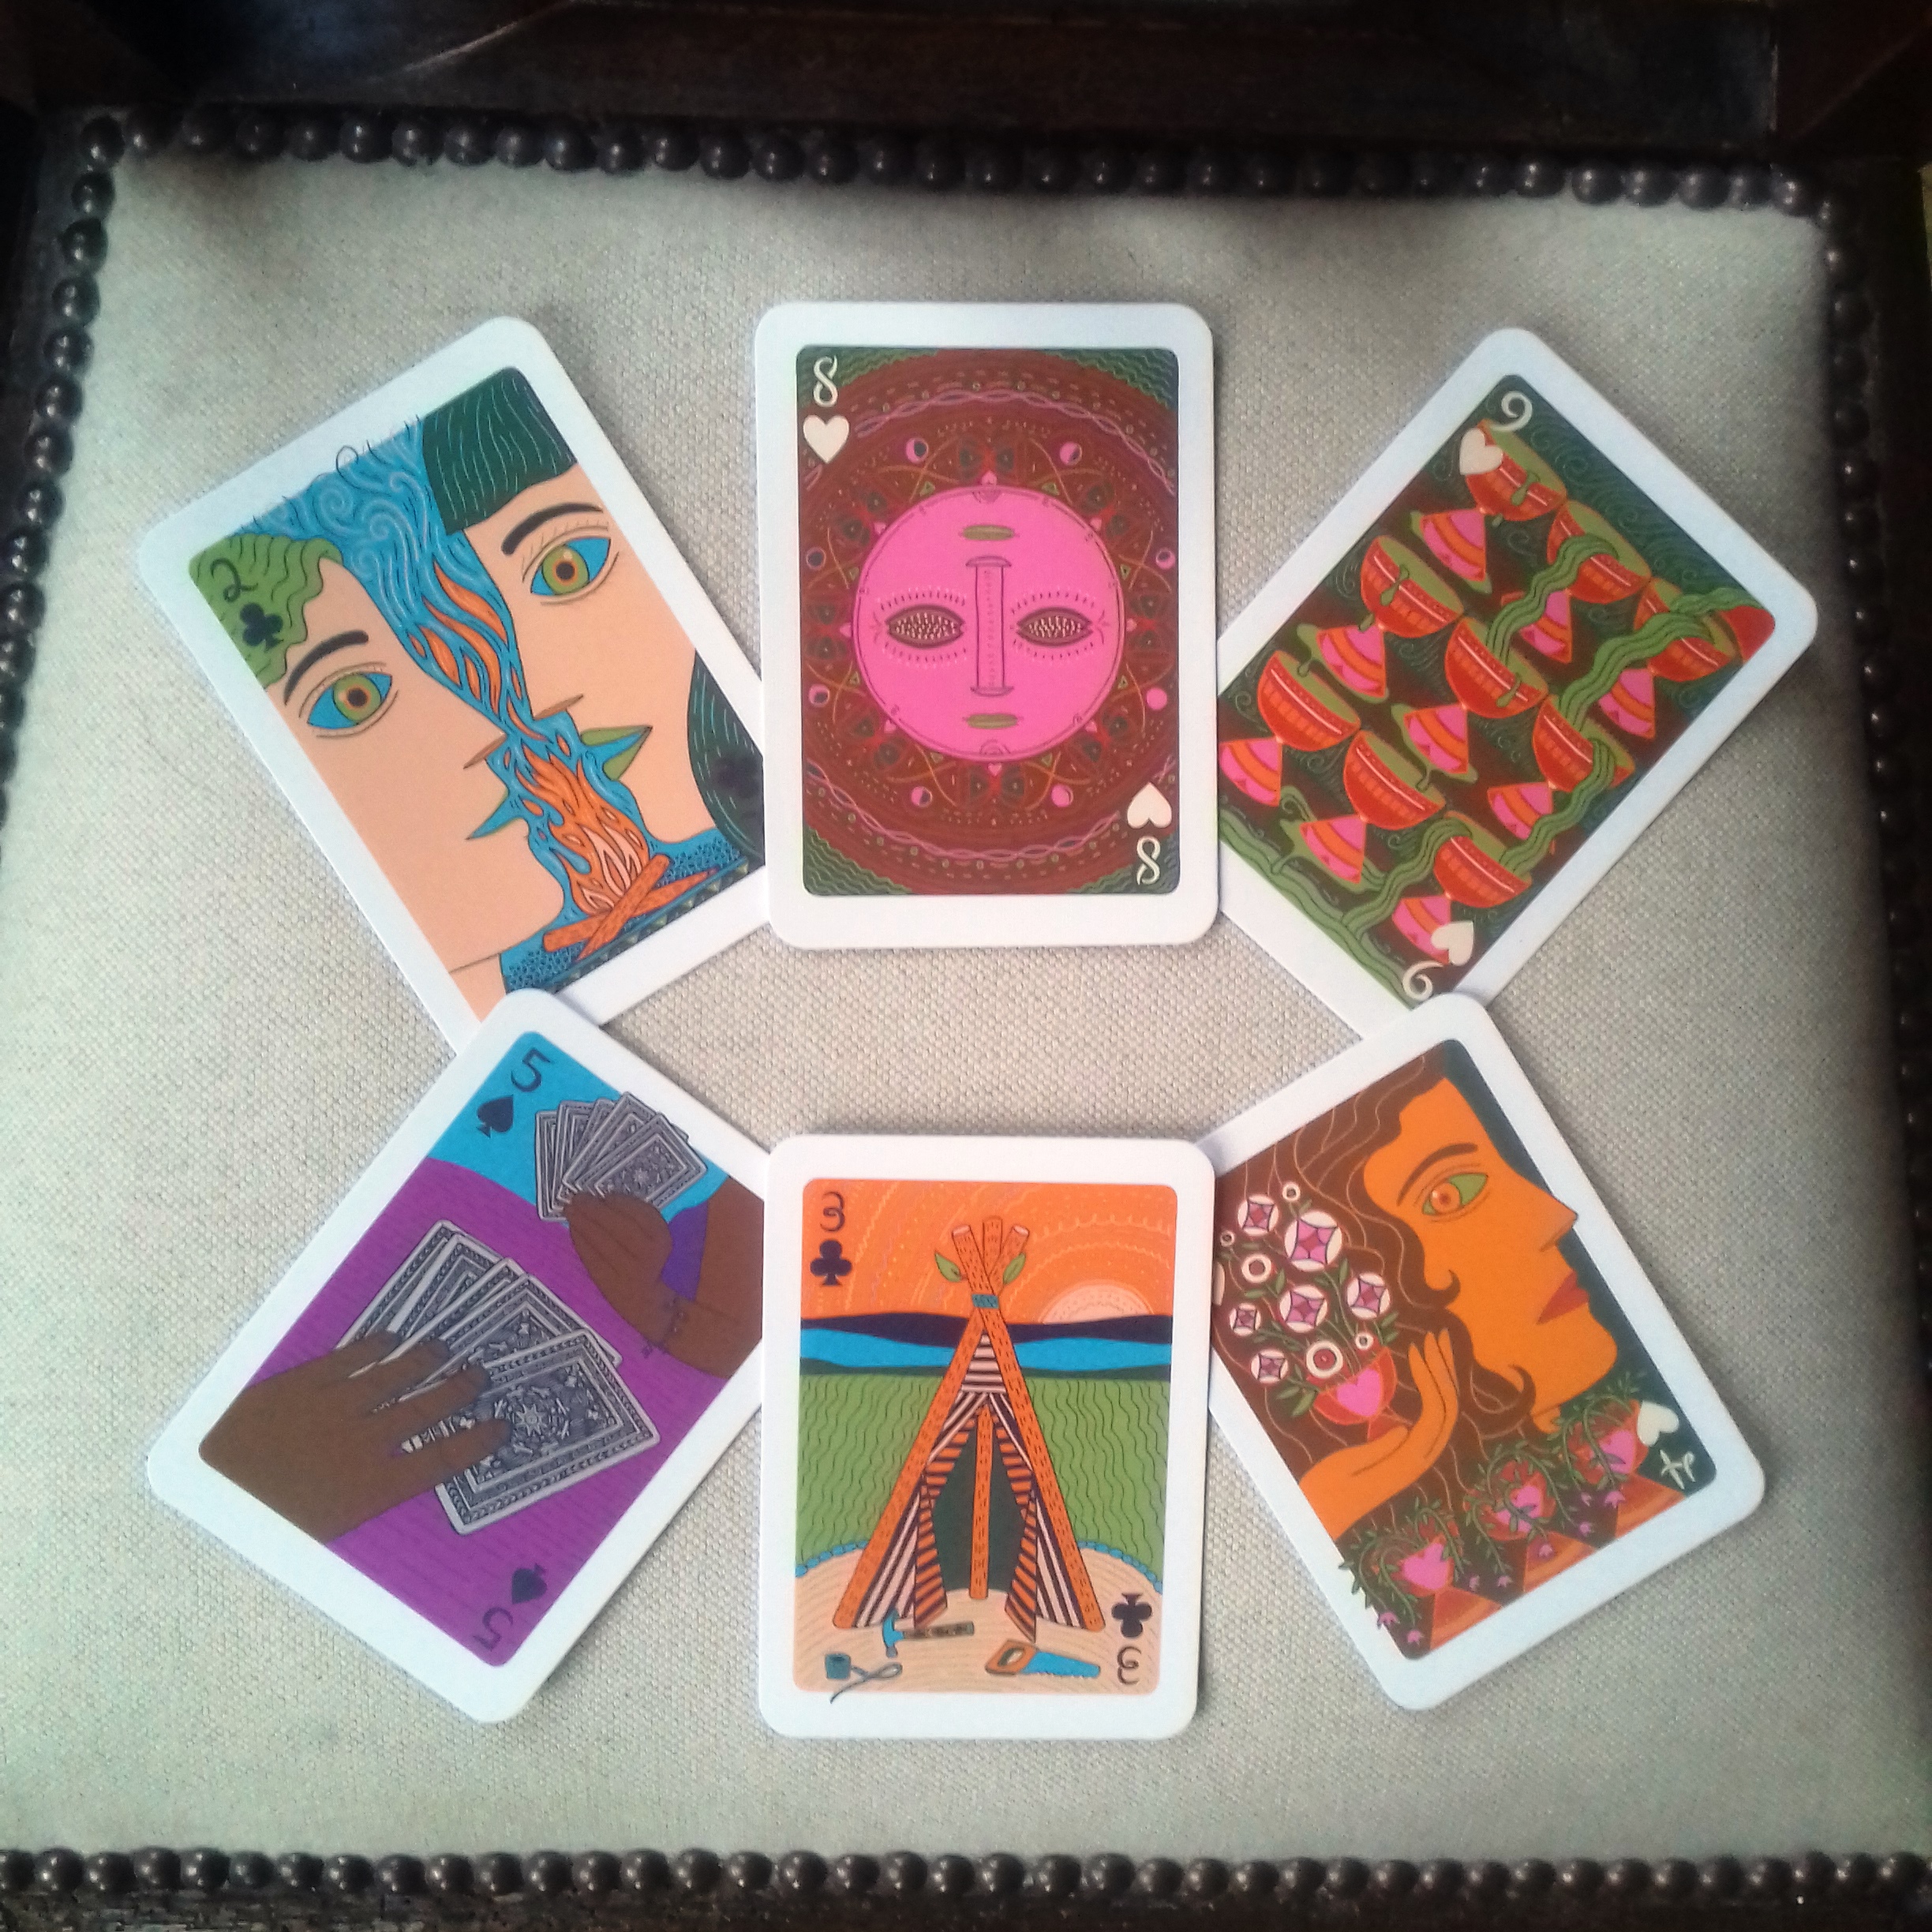 The Illuminated Tarot: 53 Cards for Divination & Gameplay (The Illuminated Art Series): Amazon.co.uk: Caitlin Keegan: 9780451496836: Books